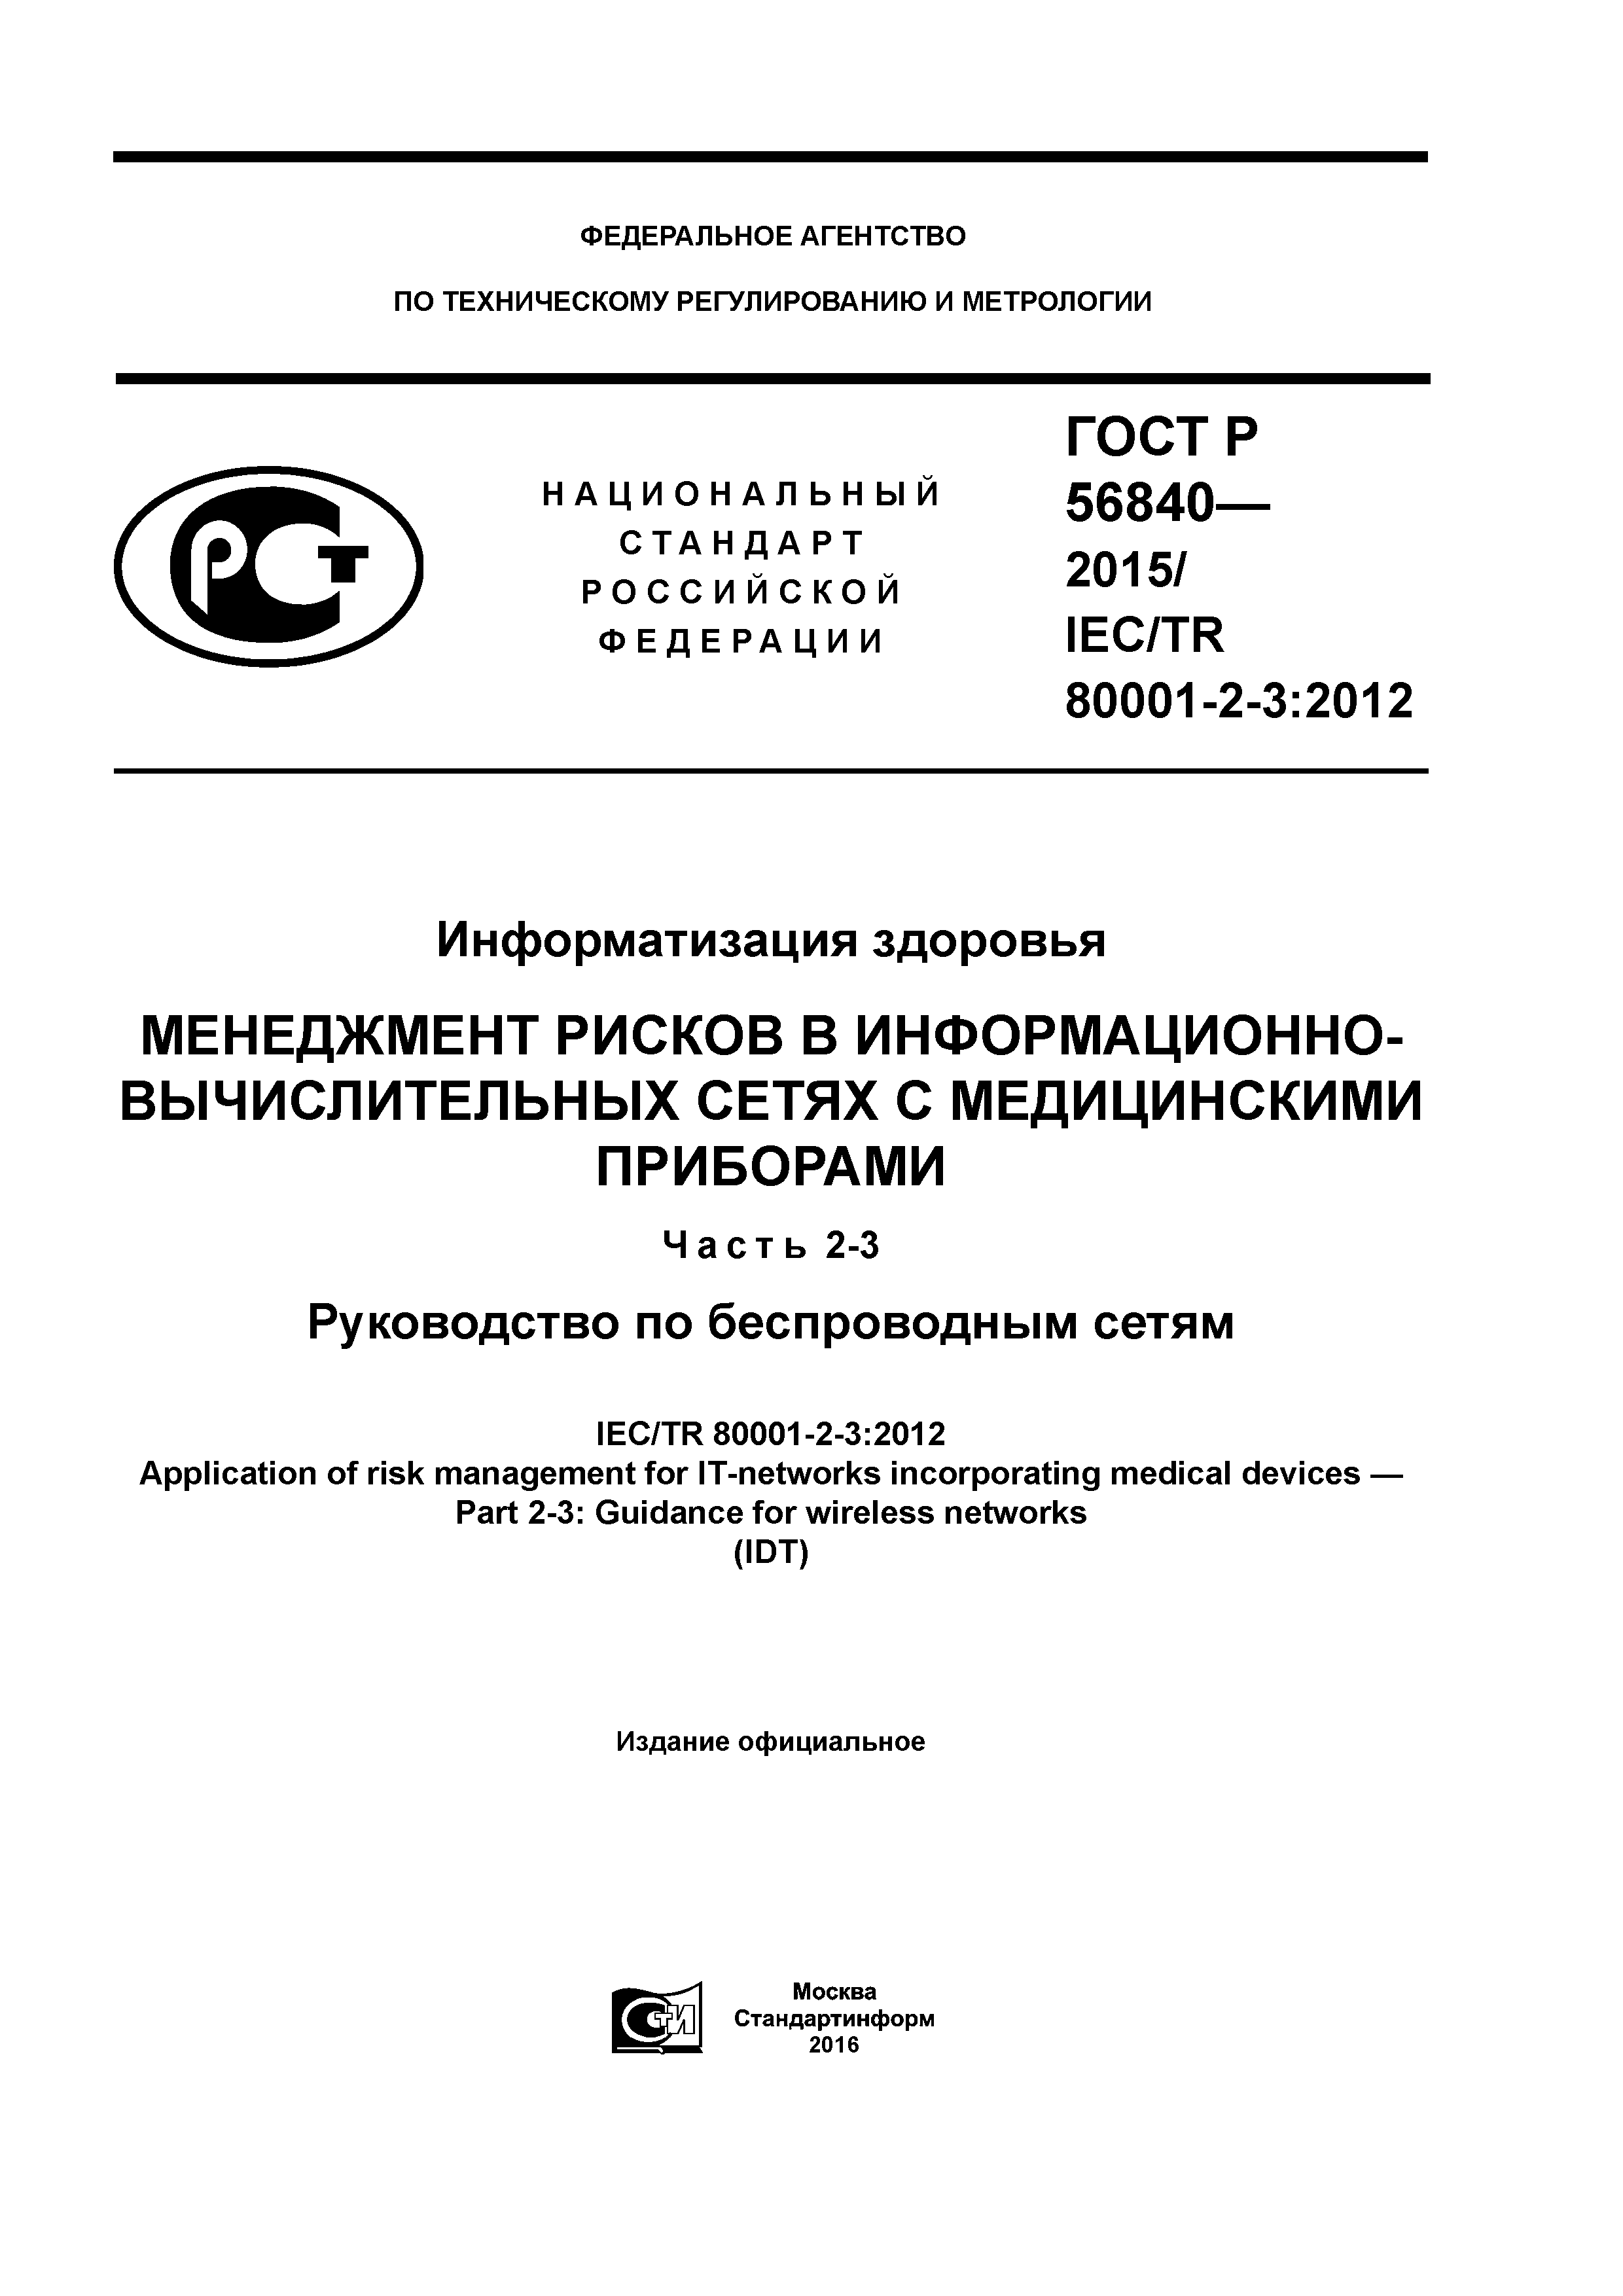 ГОСТ Р 56840-2015